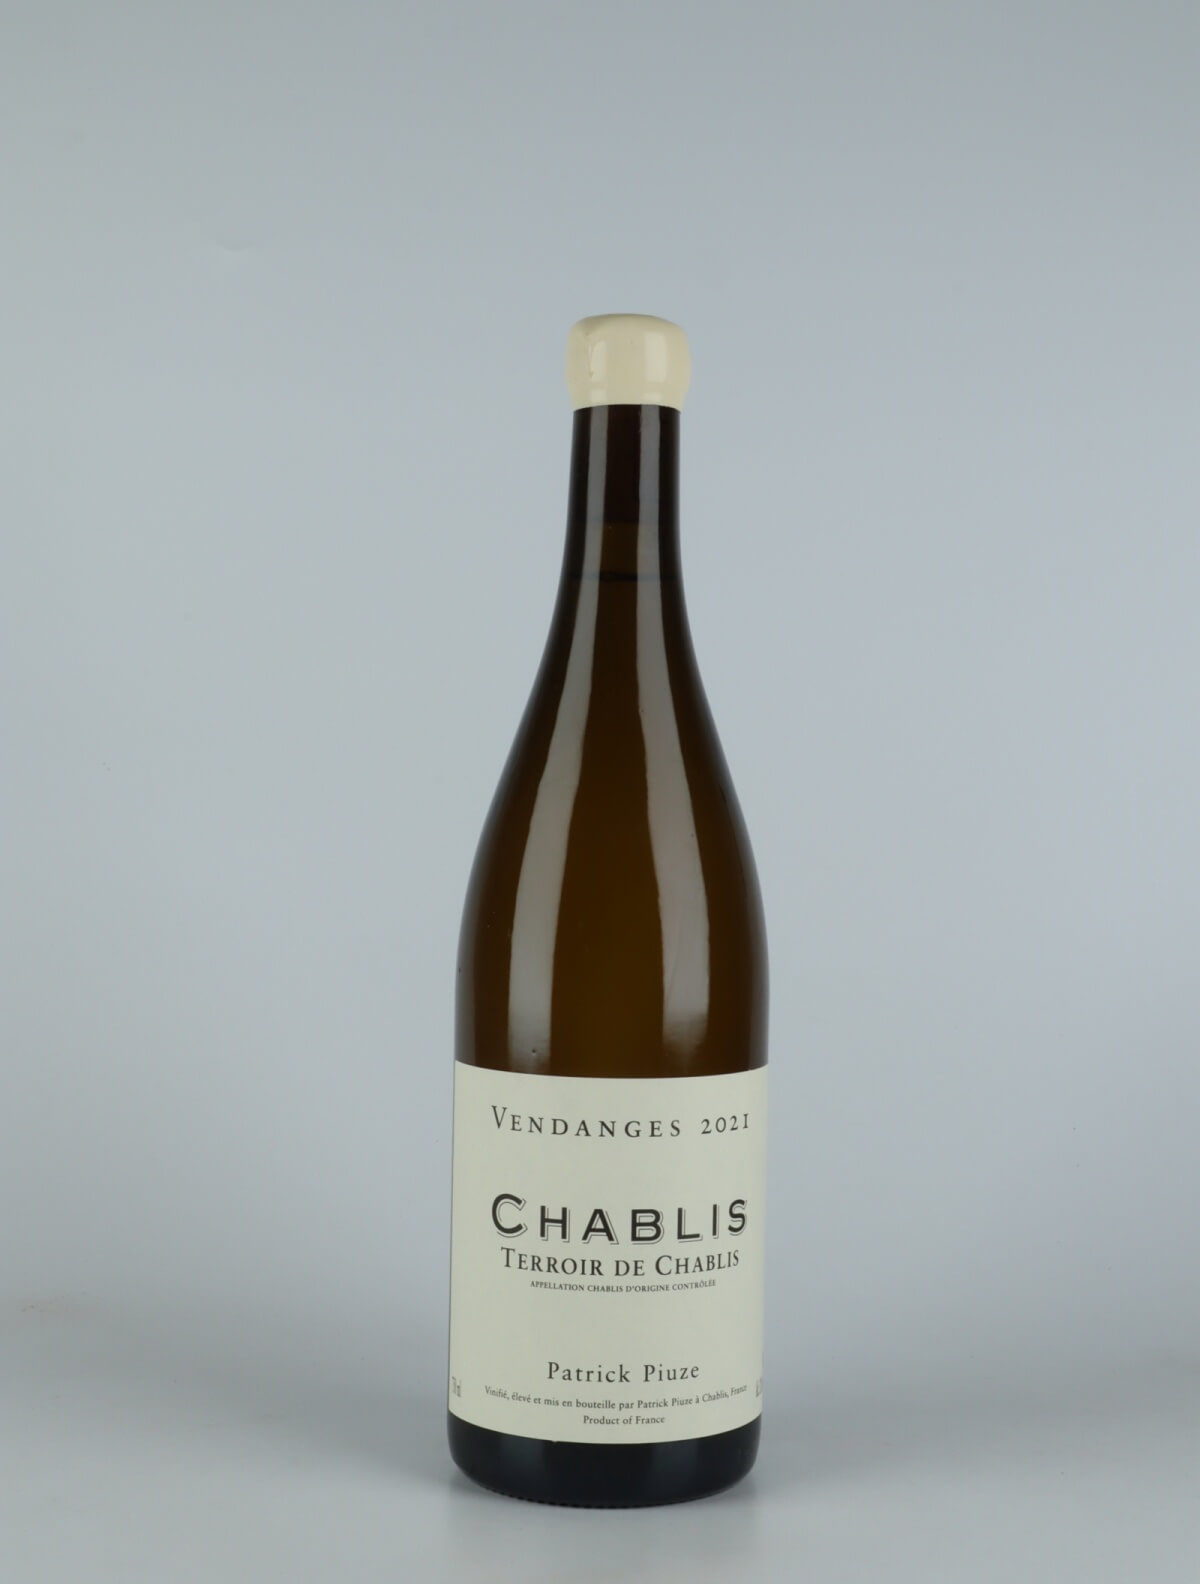 En flaske 2021 Chablis - Terroir de Chablis Hvidvin fra Patrick Piuze, Bourgogne i Frankrig